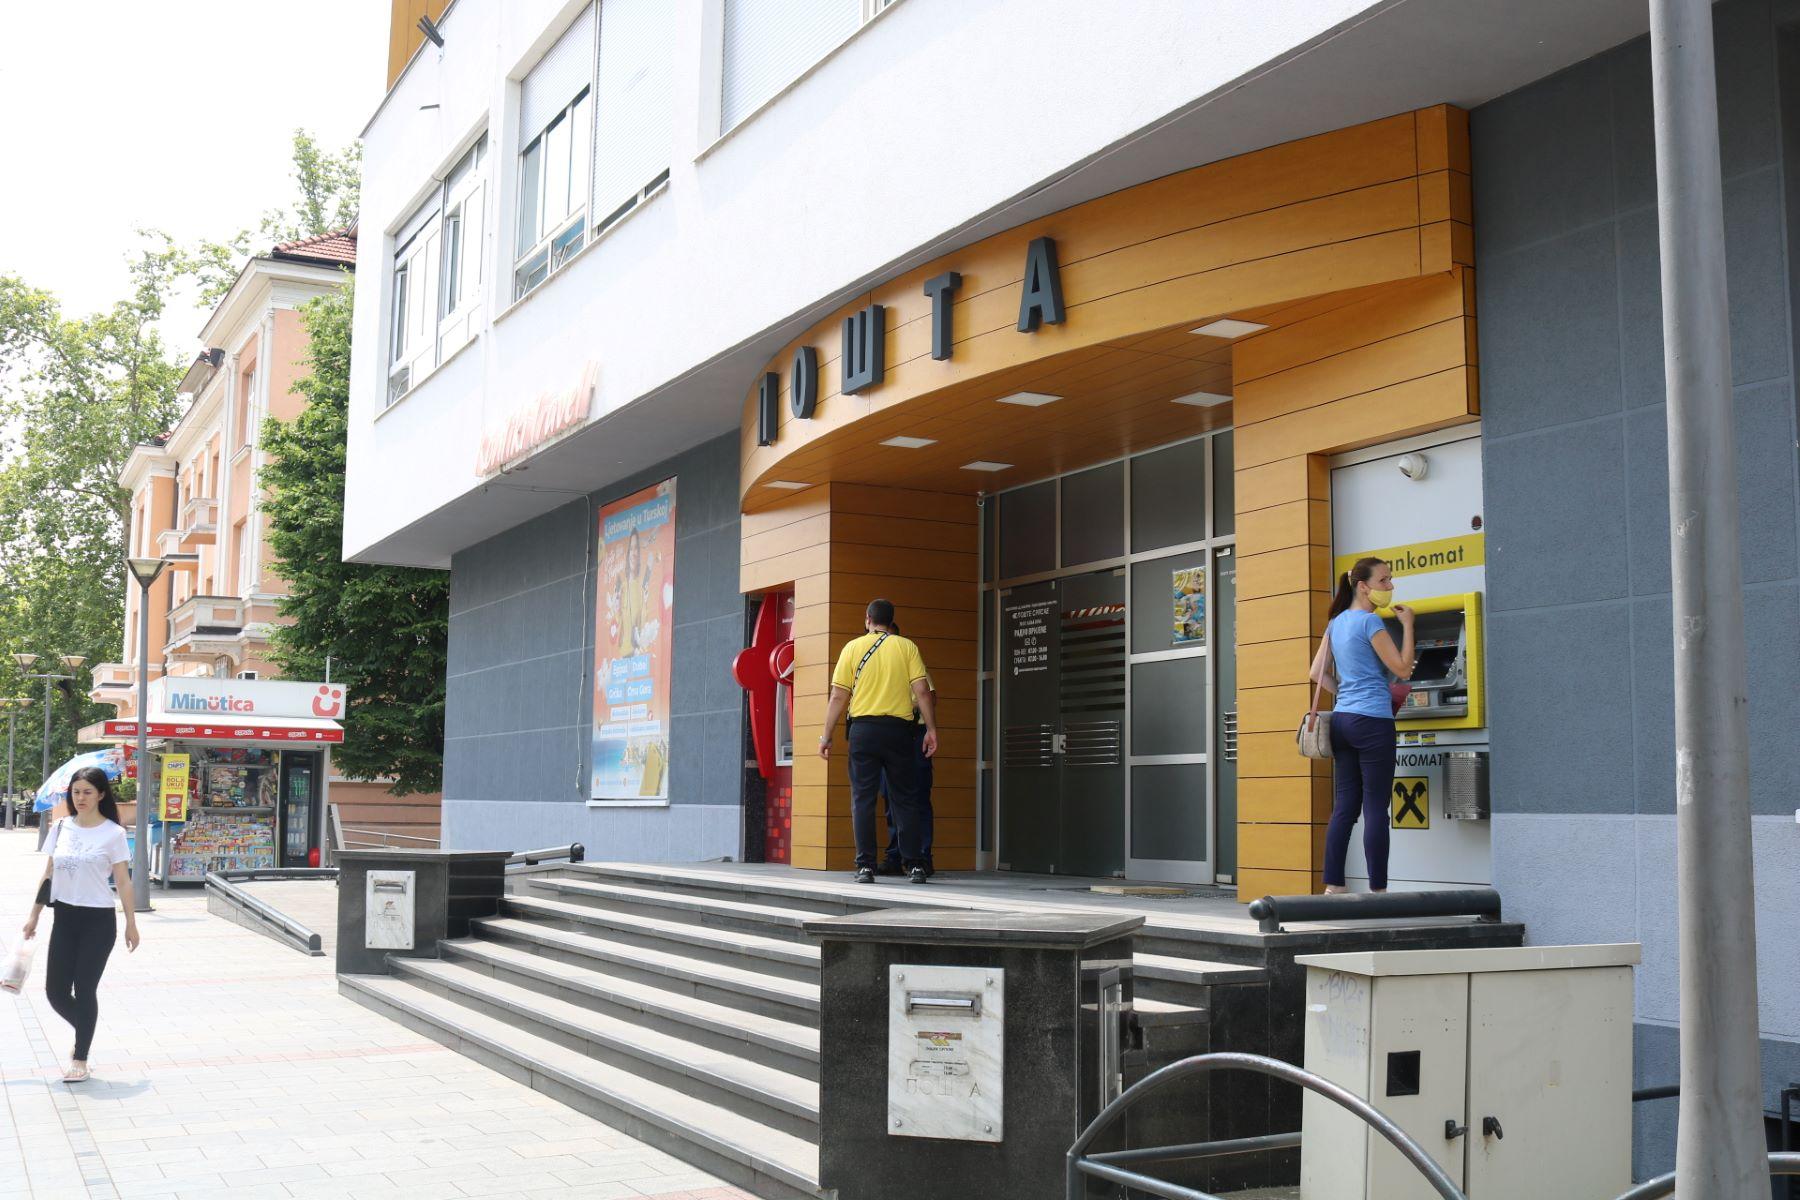 Oba kredita odobrila im je "Banka Poštanska štedionica", bivša Komercijalna banka Banja Luka - Avaz